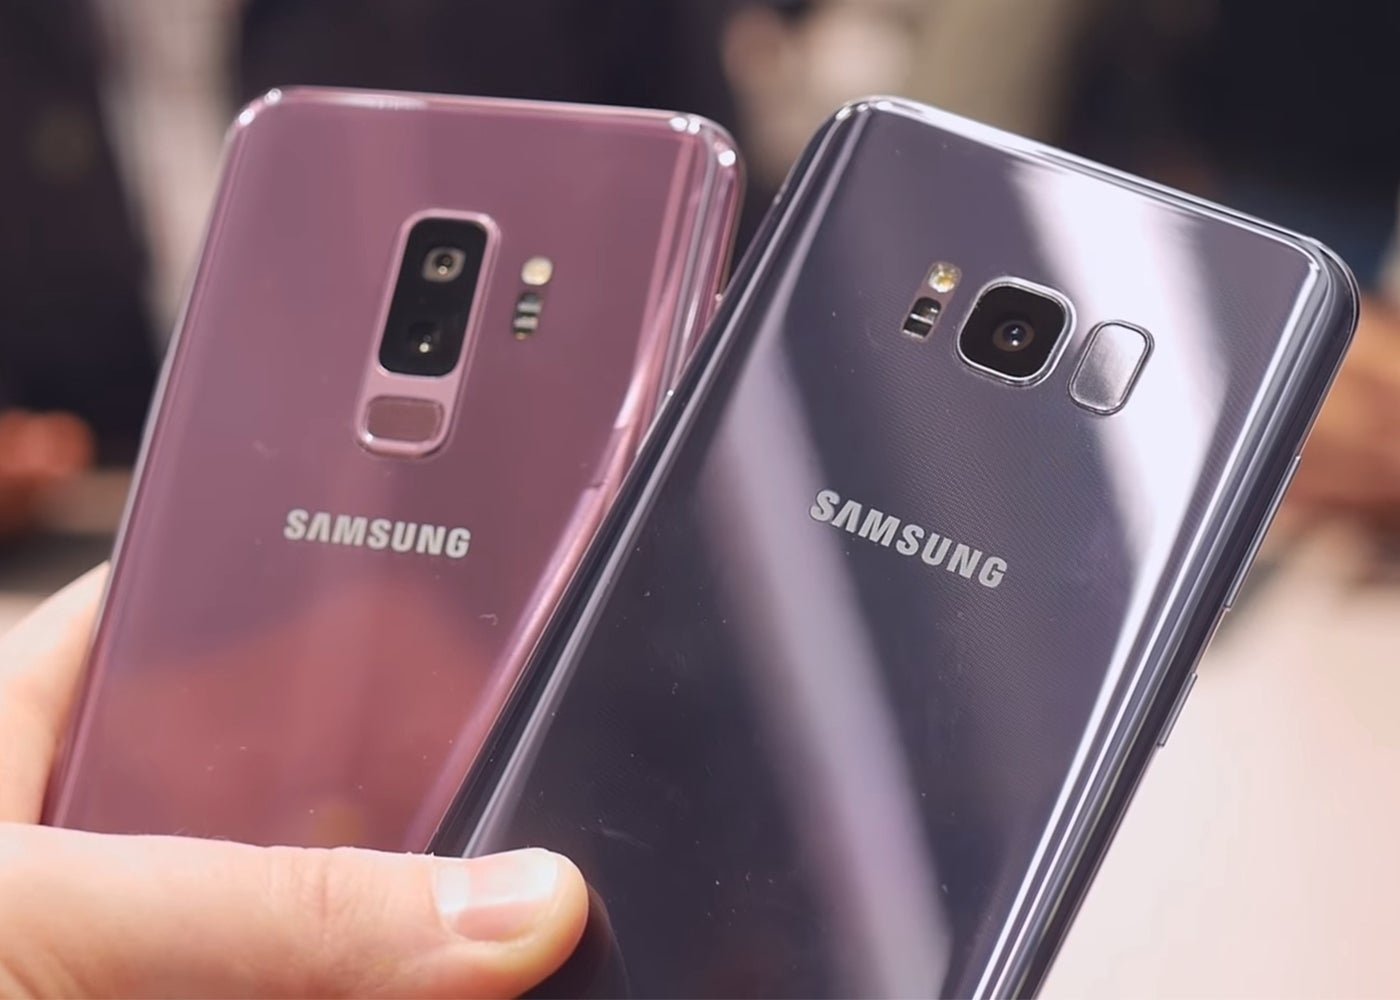 Samsung Galaxy S9 Plus vs S8 Plus